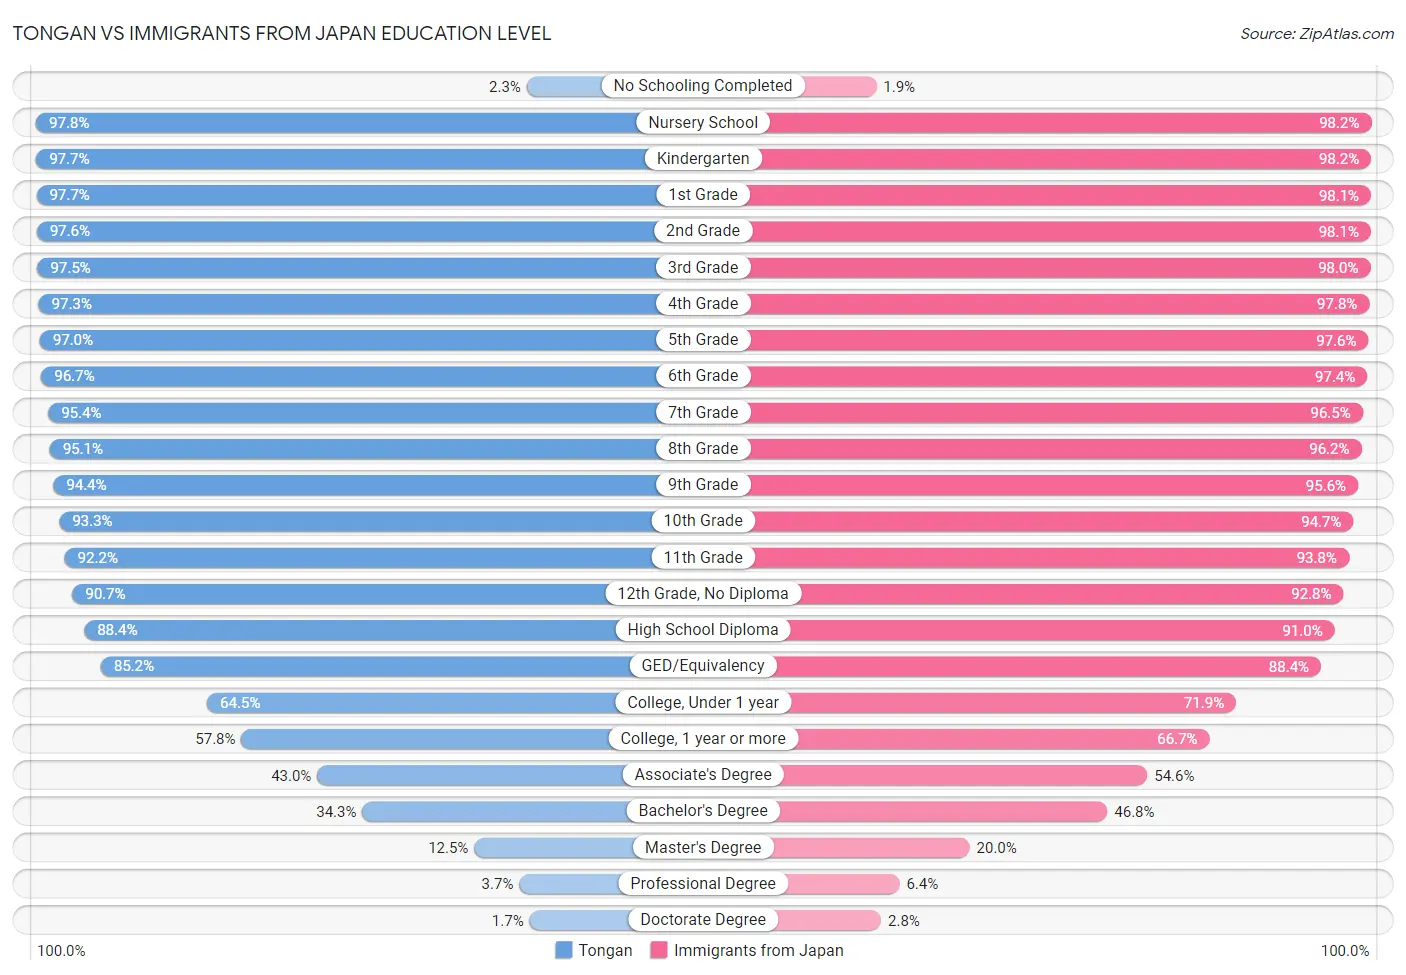 Tongan vs Immigrants from Japan Education Level